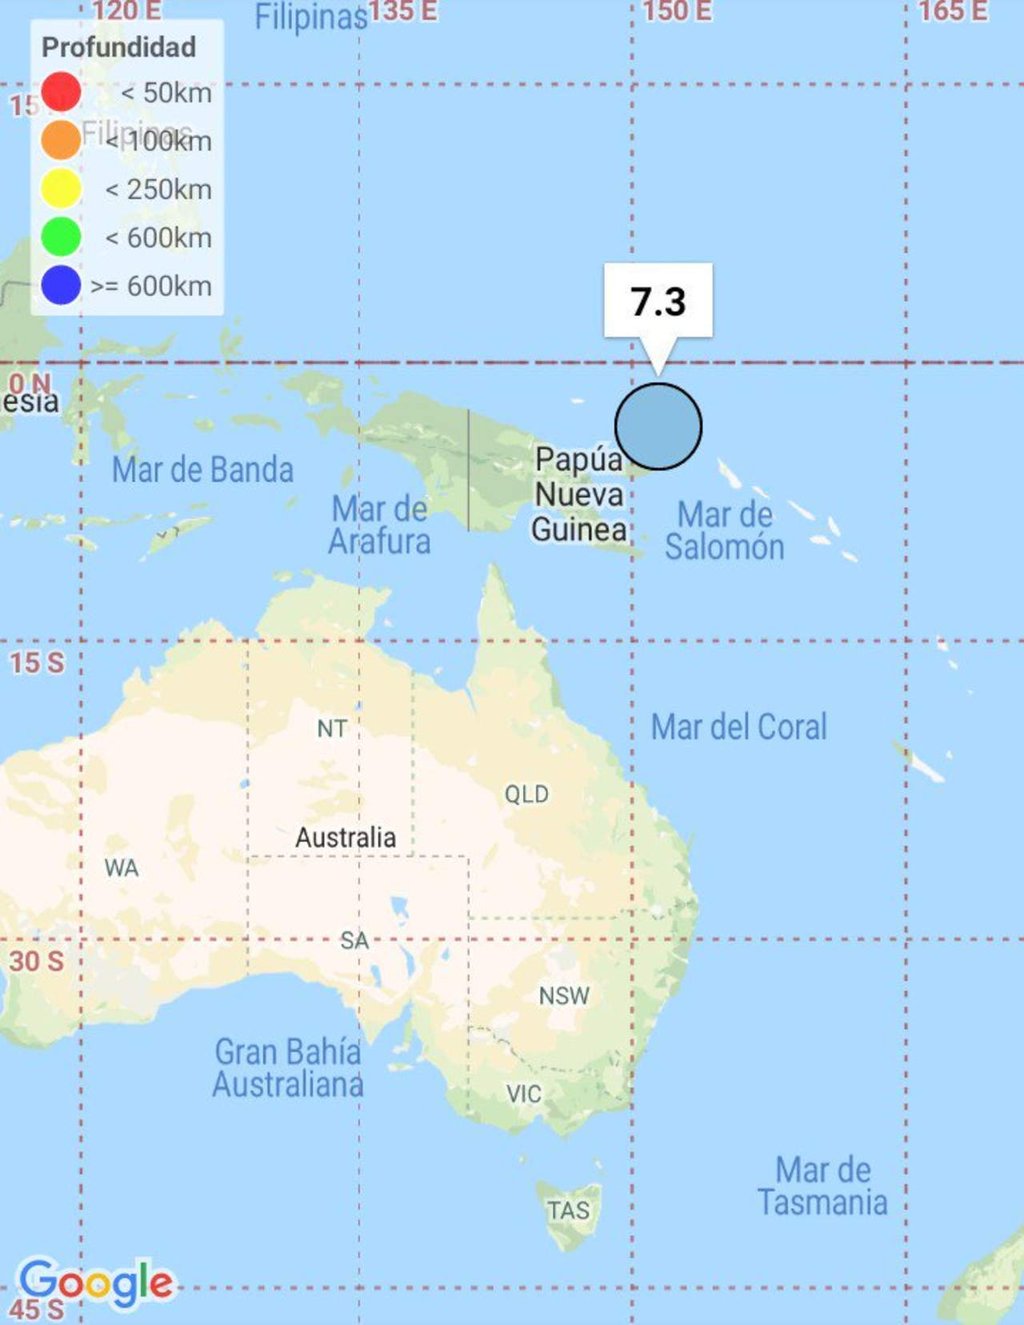 Desestiman riesgo por tsunami en Australia tras sismo en Papúa Nueva Guinea